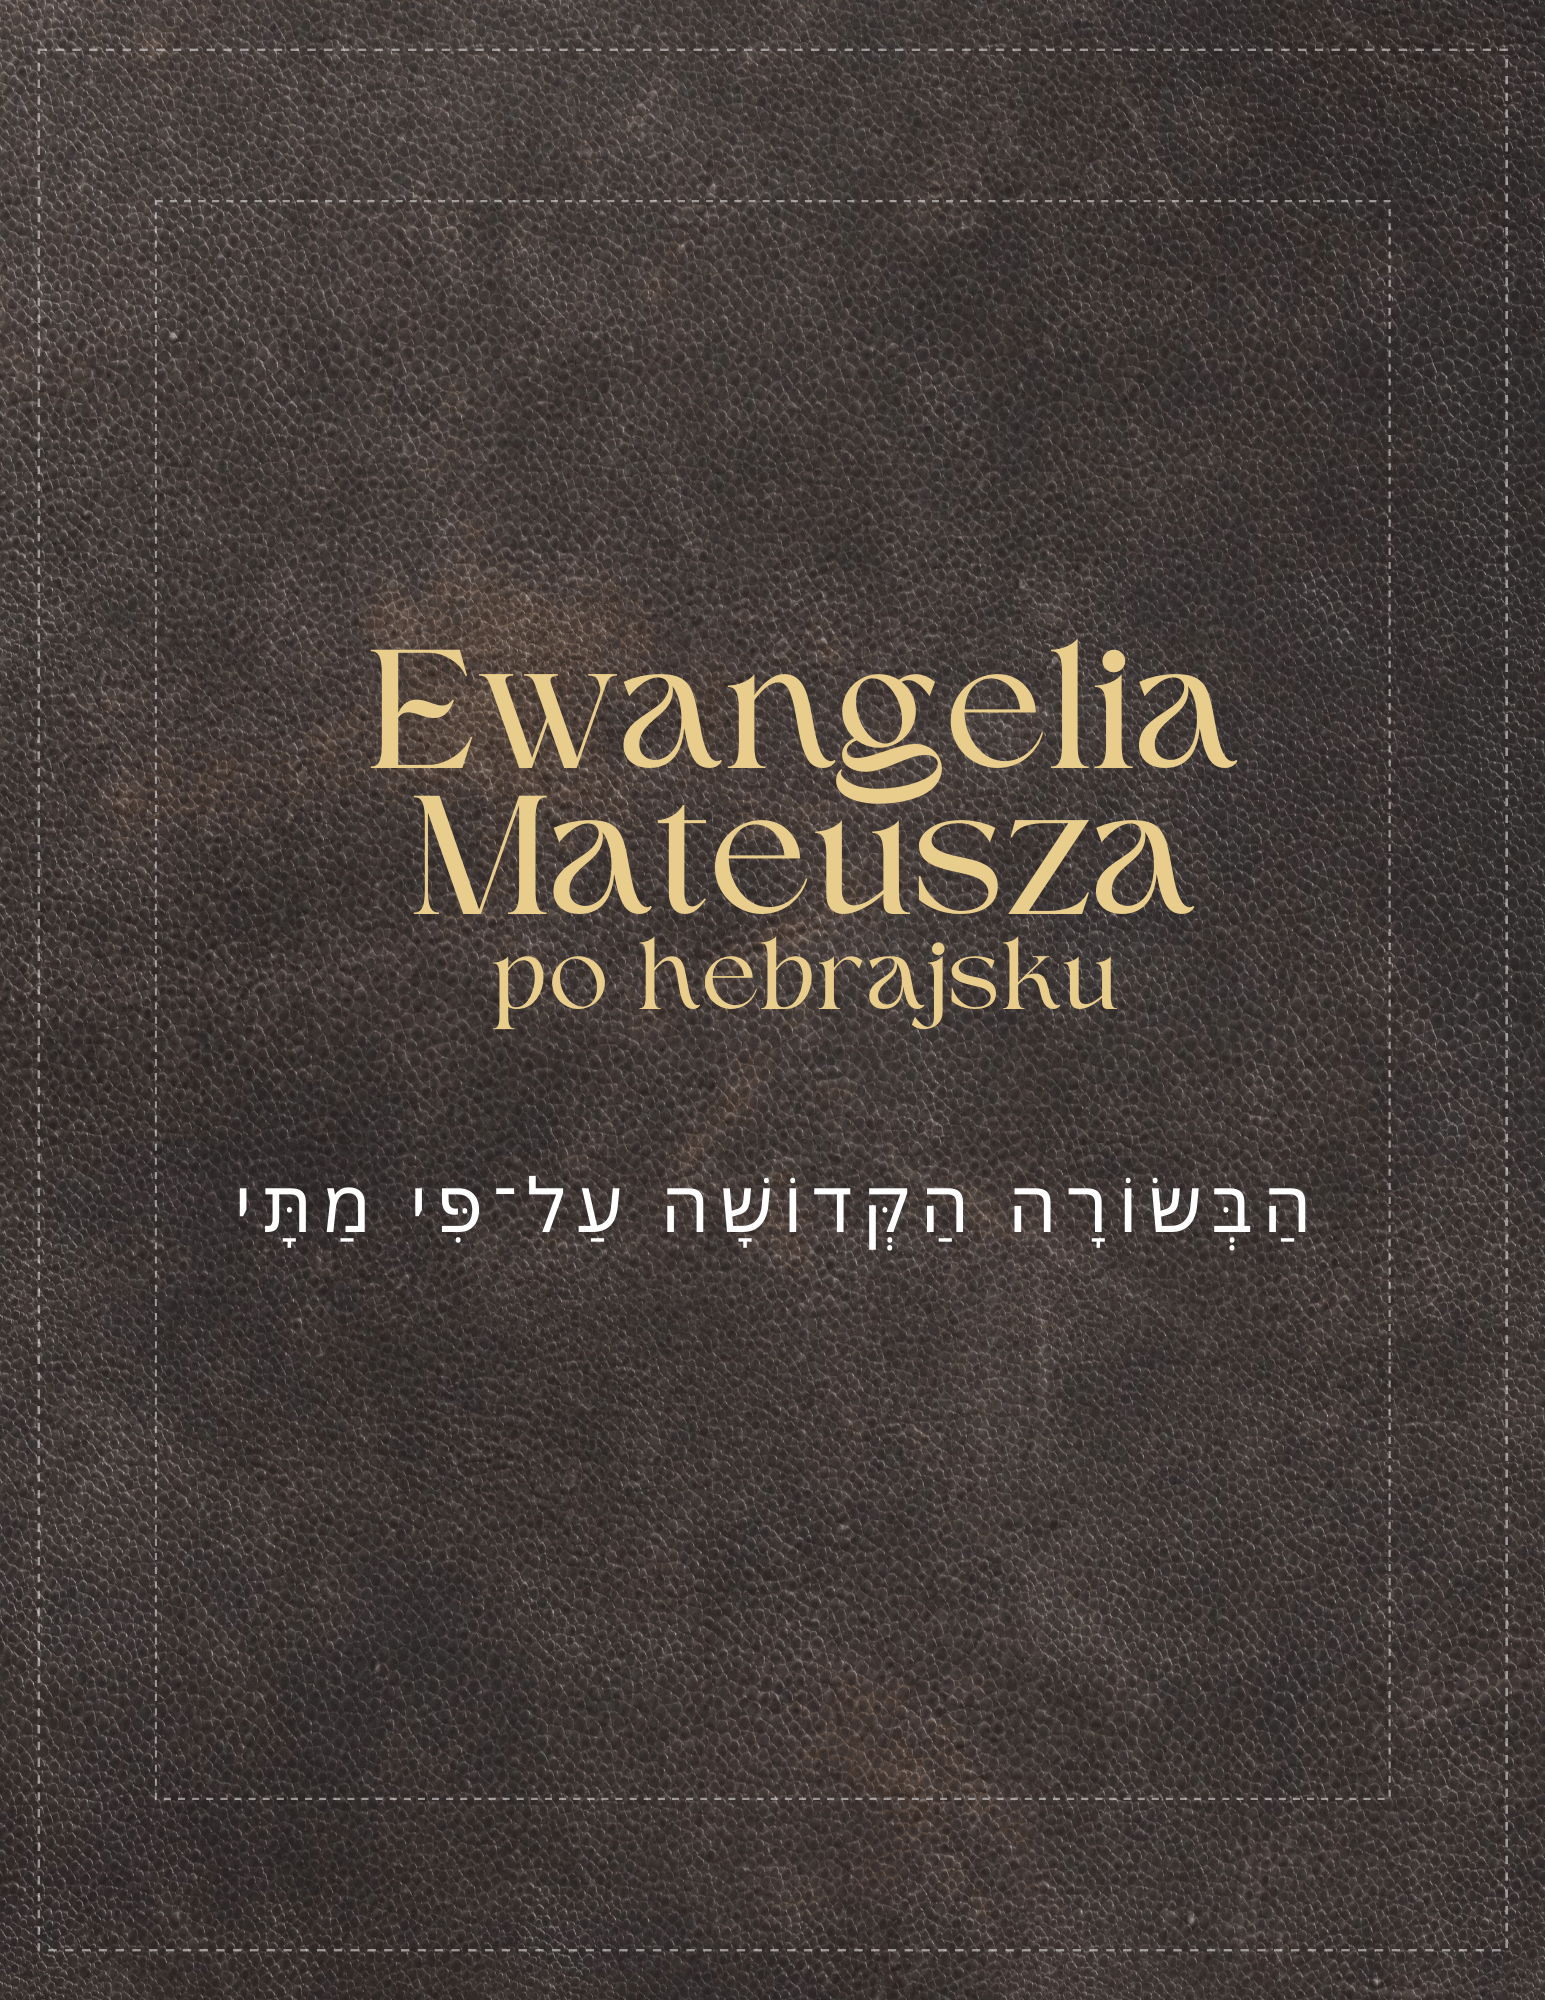 Ewangelia Mateusza po hebrajsku